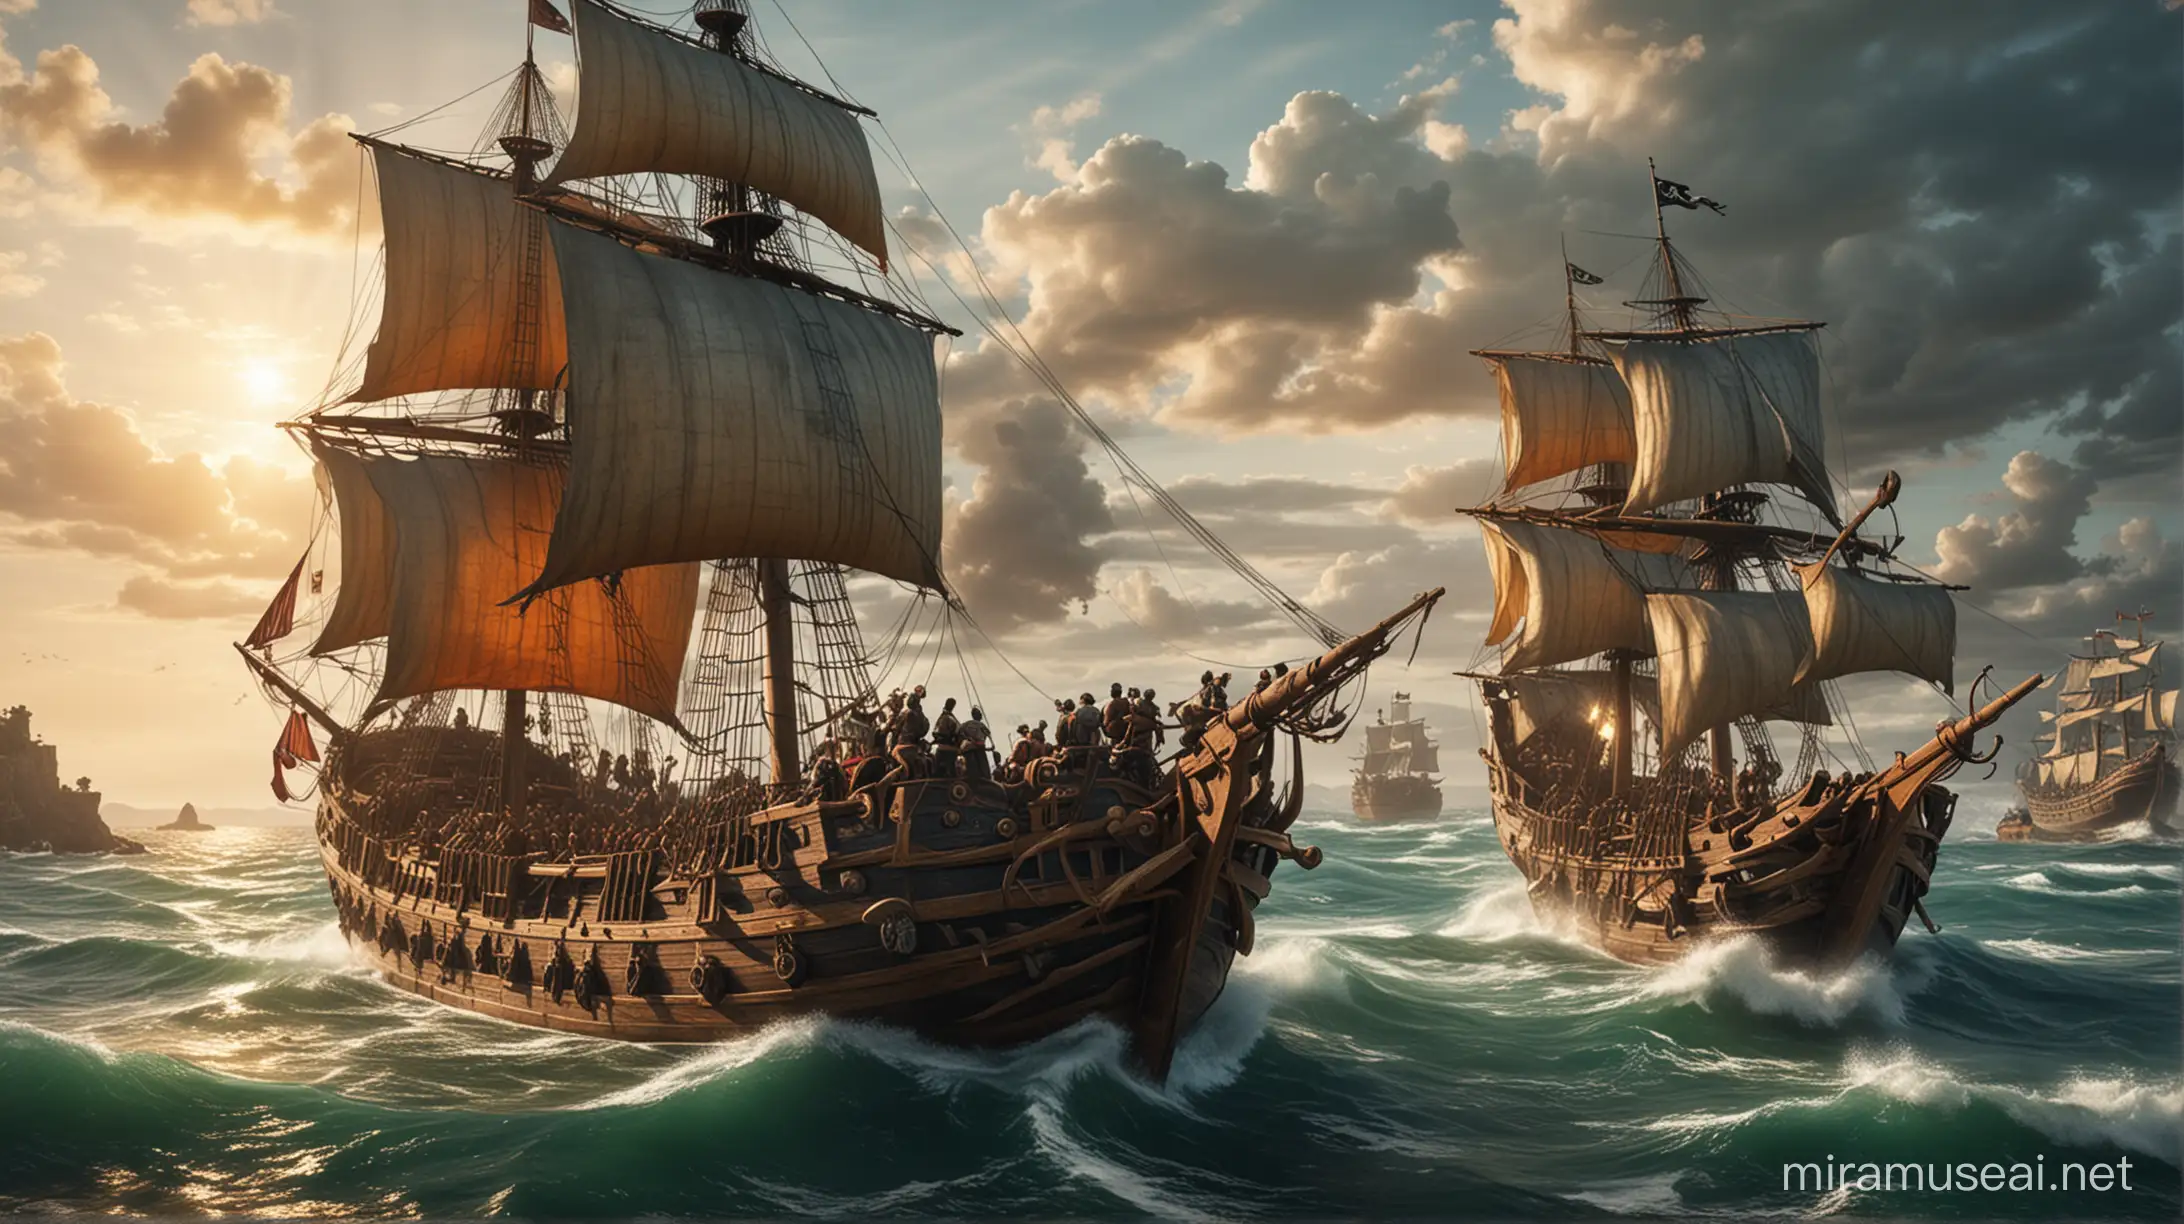 Intense Battle Scene Roman Ship vs Pirate Ship